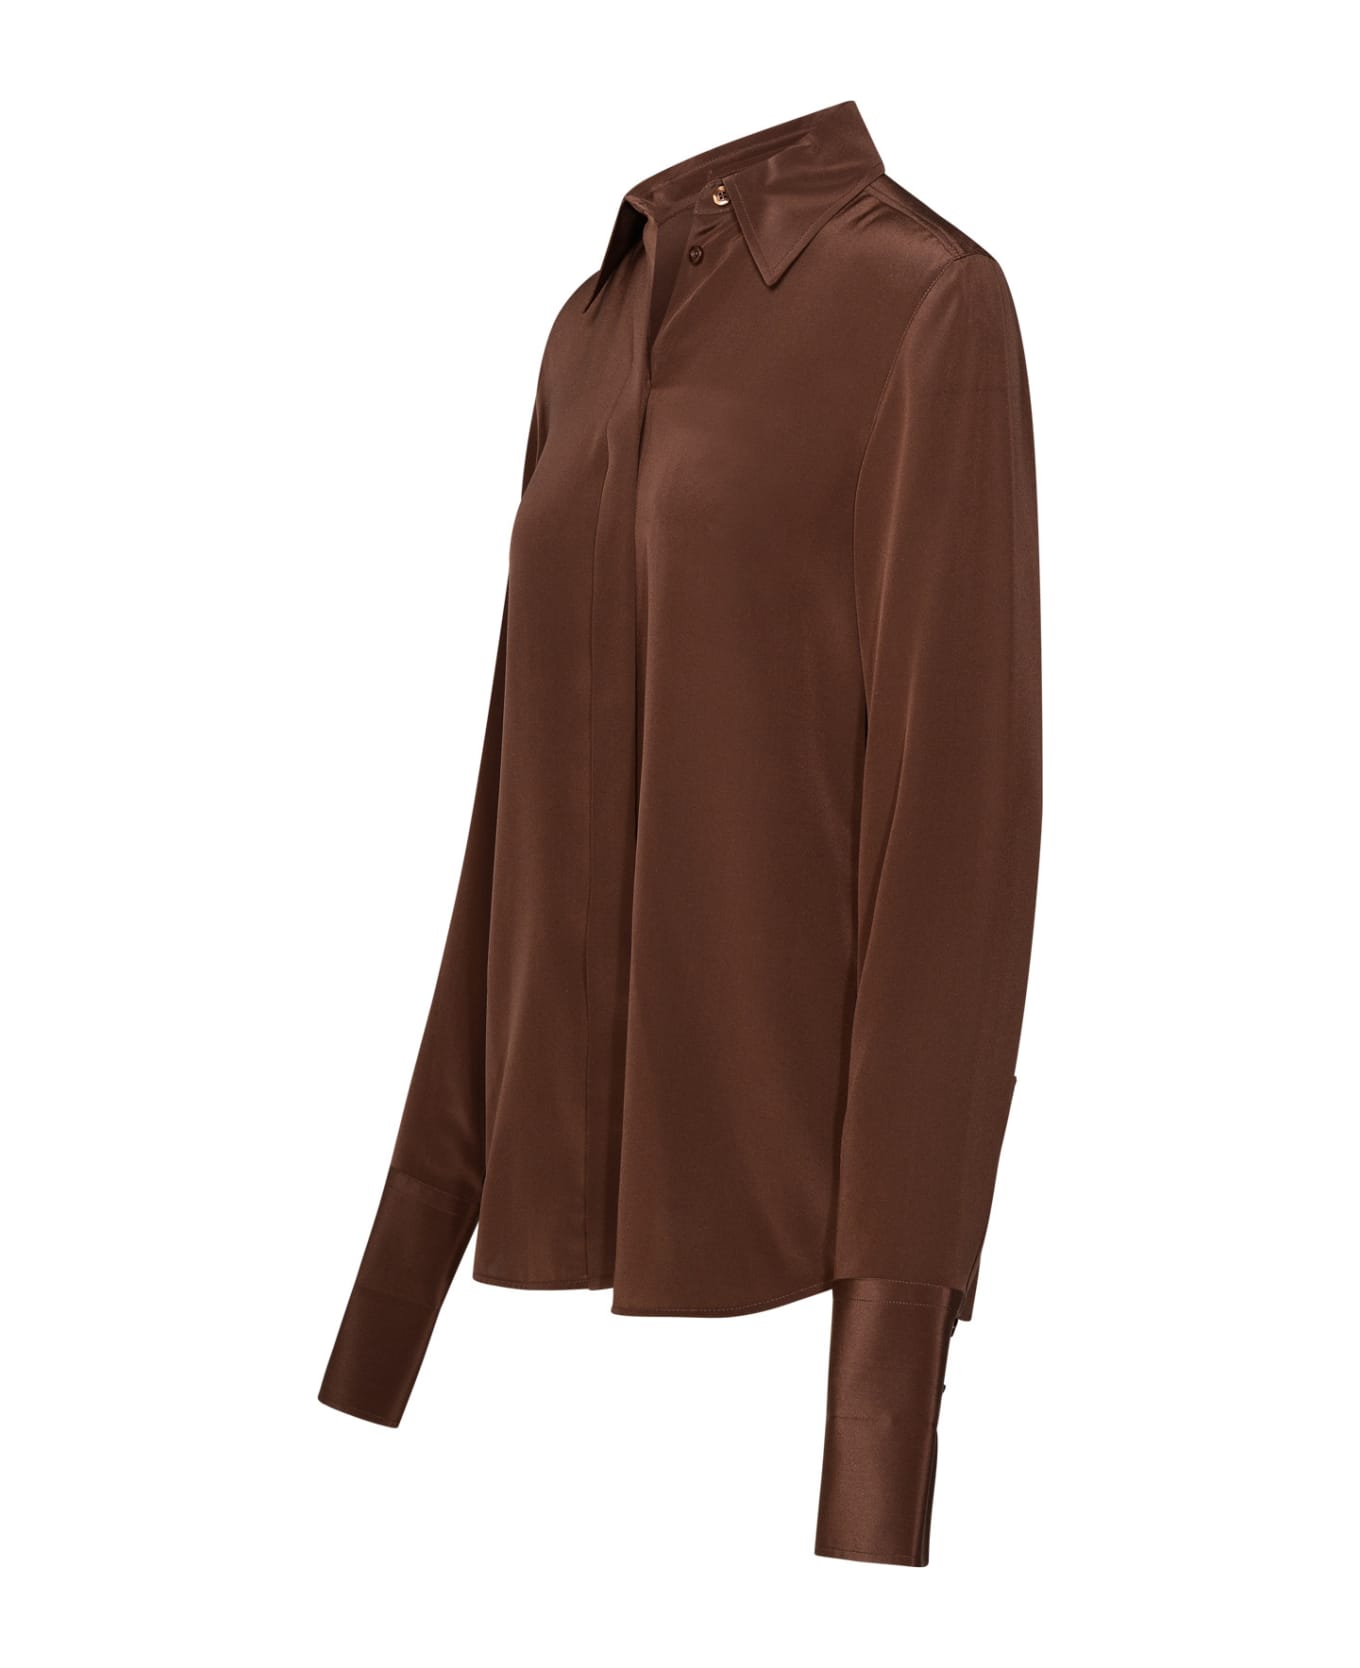 SportMax Brown Silk Shirt - Brown シャツ